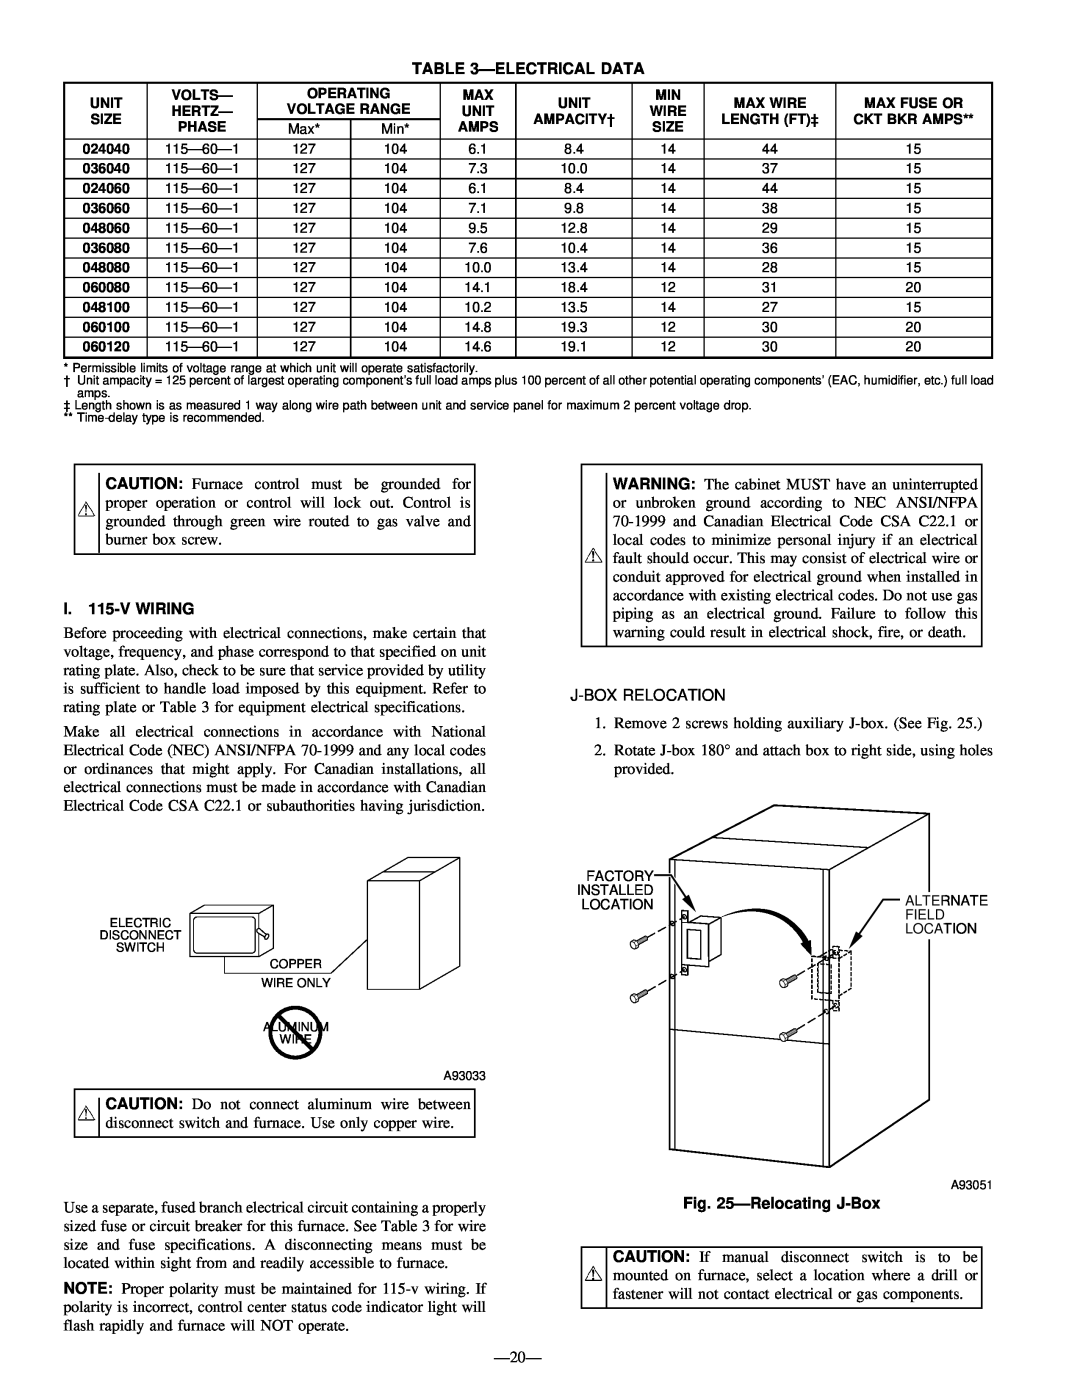 Bryant 345MAV instruction manual Ðelectrical Data, I.115-VWIRING, J-Boxrelocation, ÐRelocating J-Box 